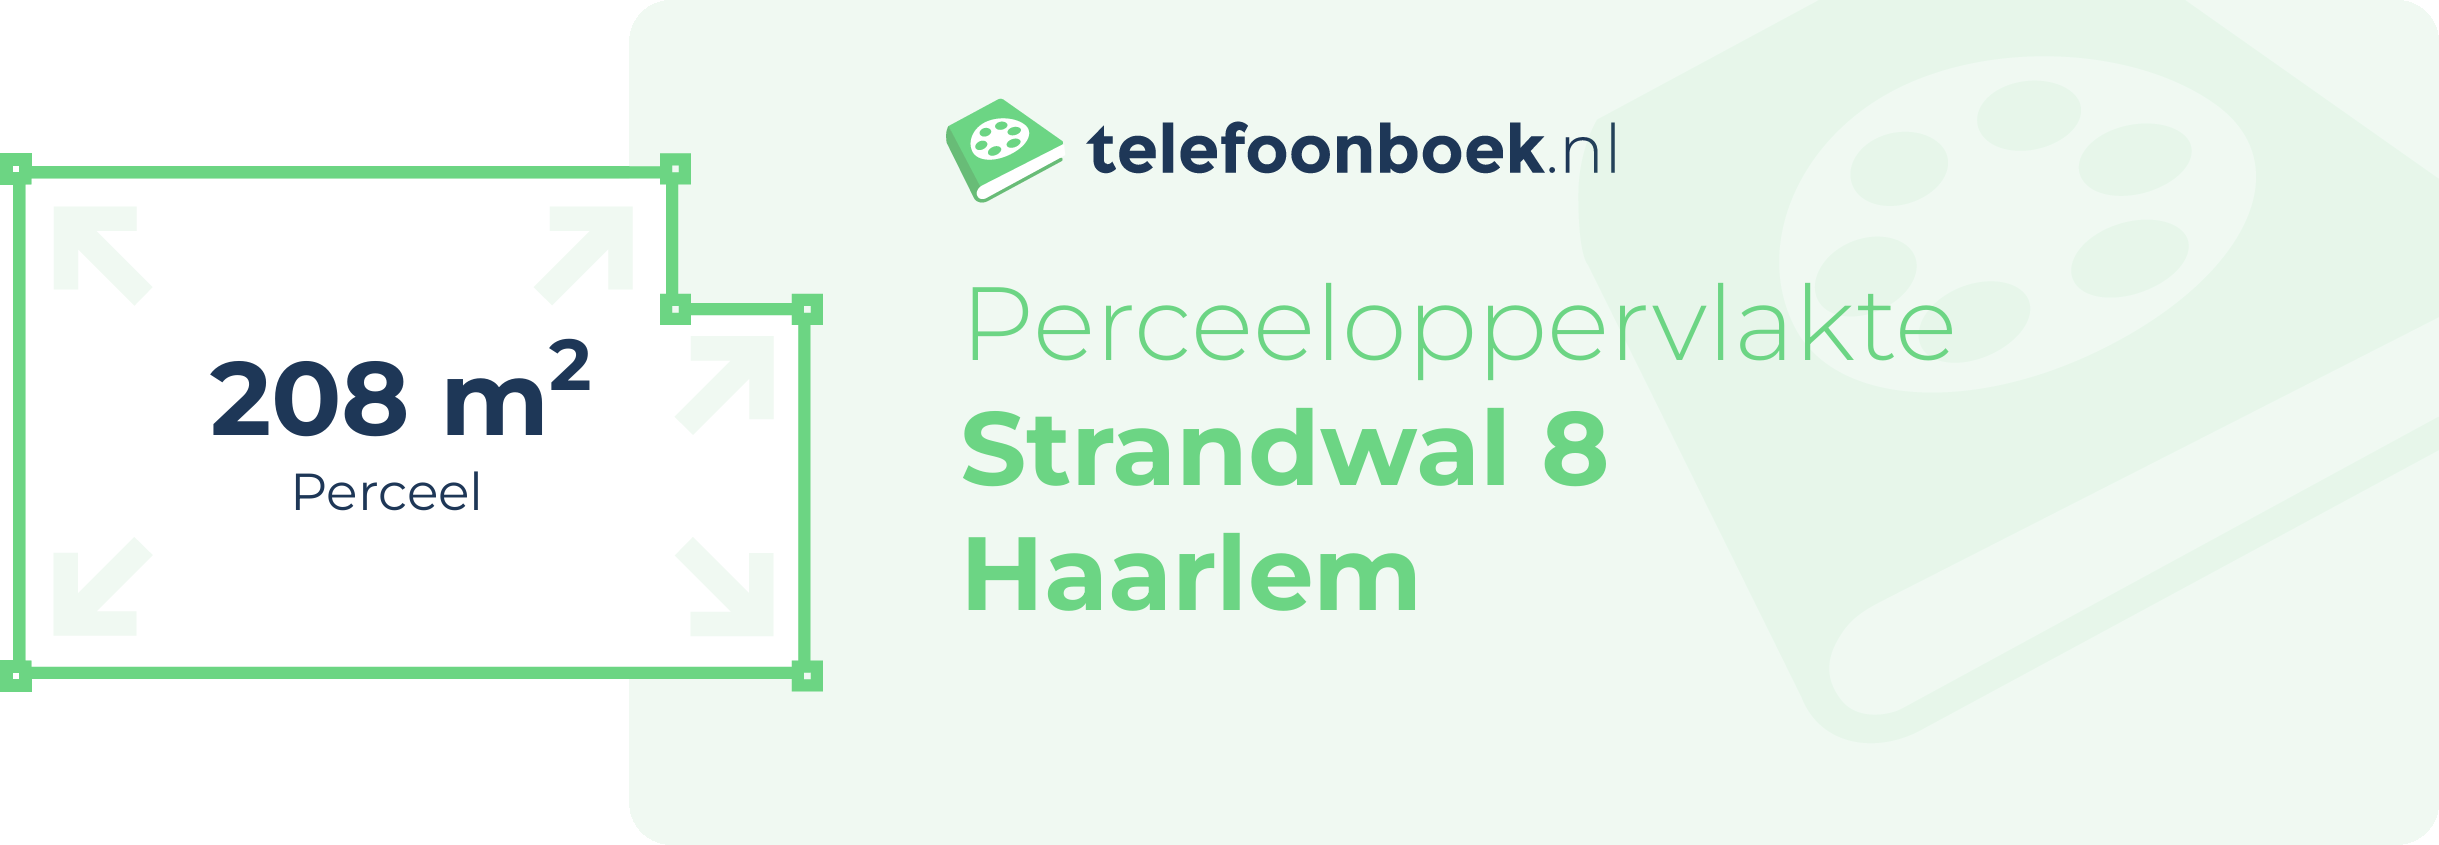 Perceeloppervlakte Strandwal 8 Haarlem